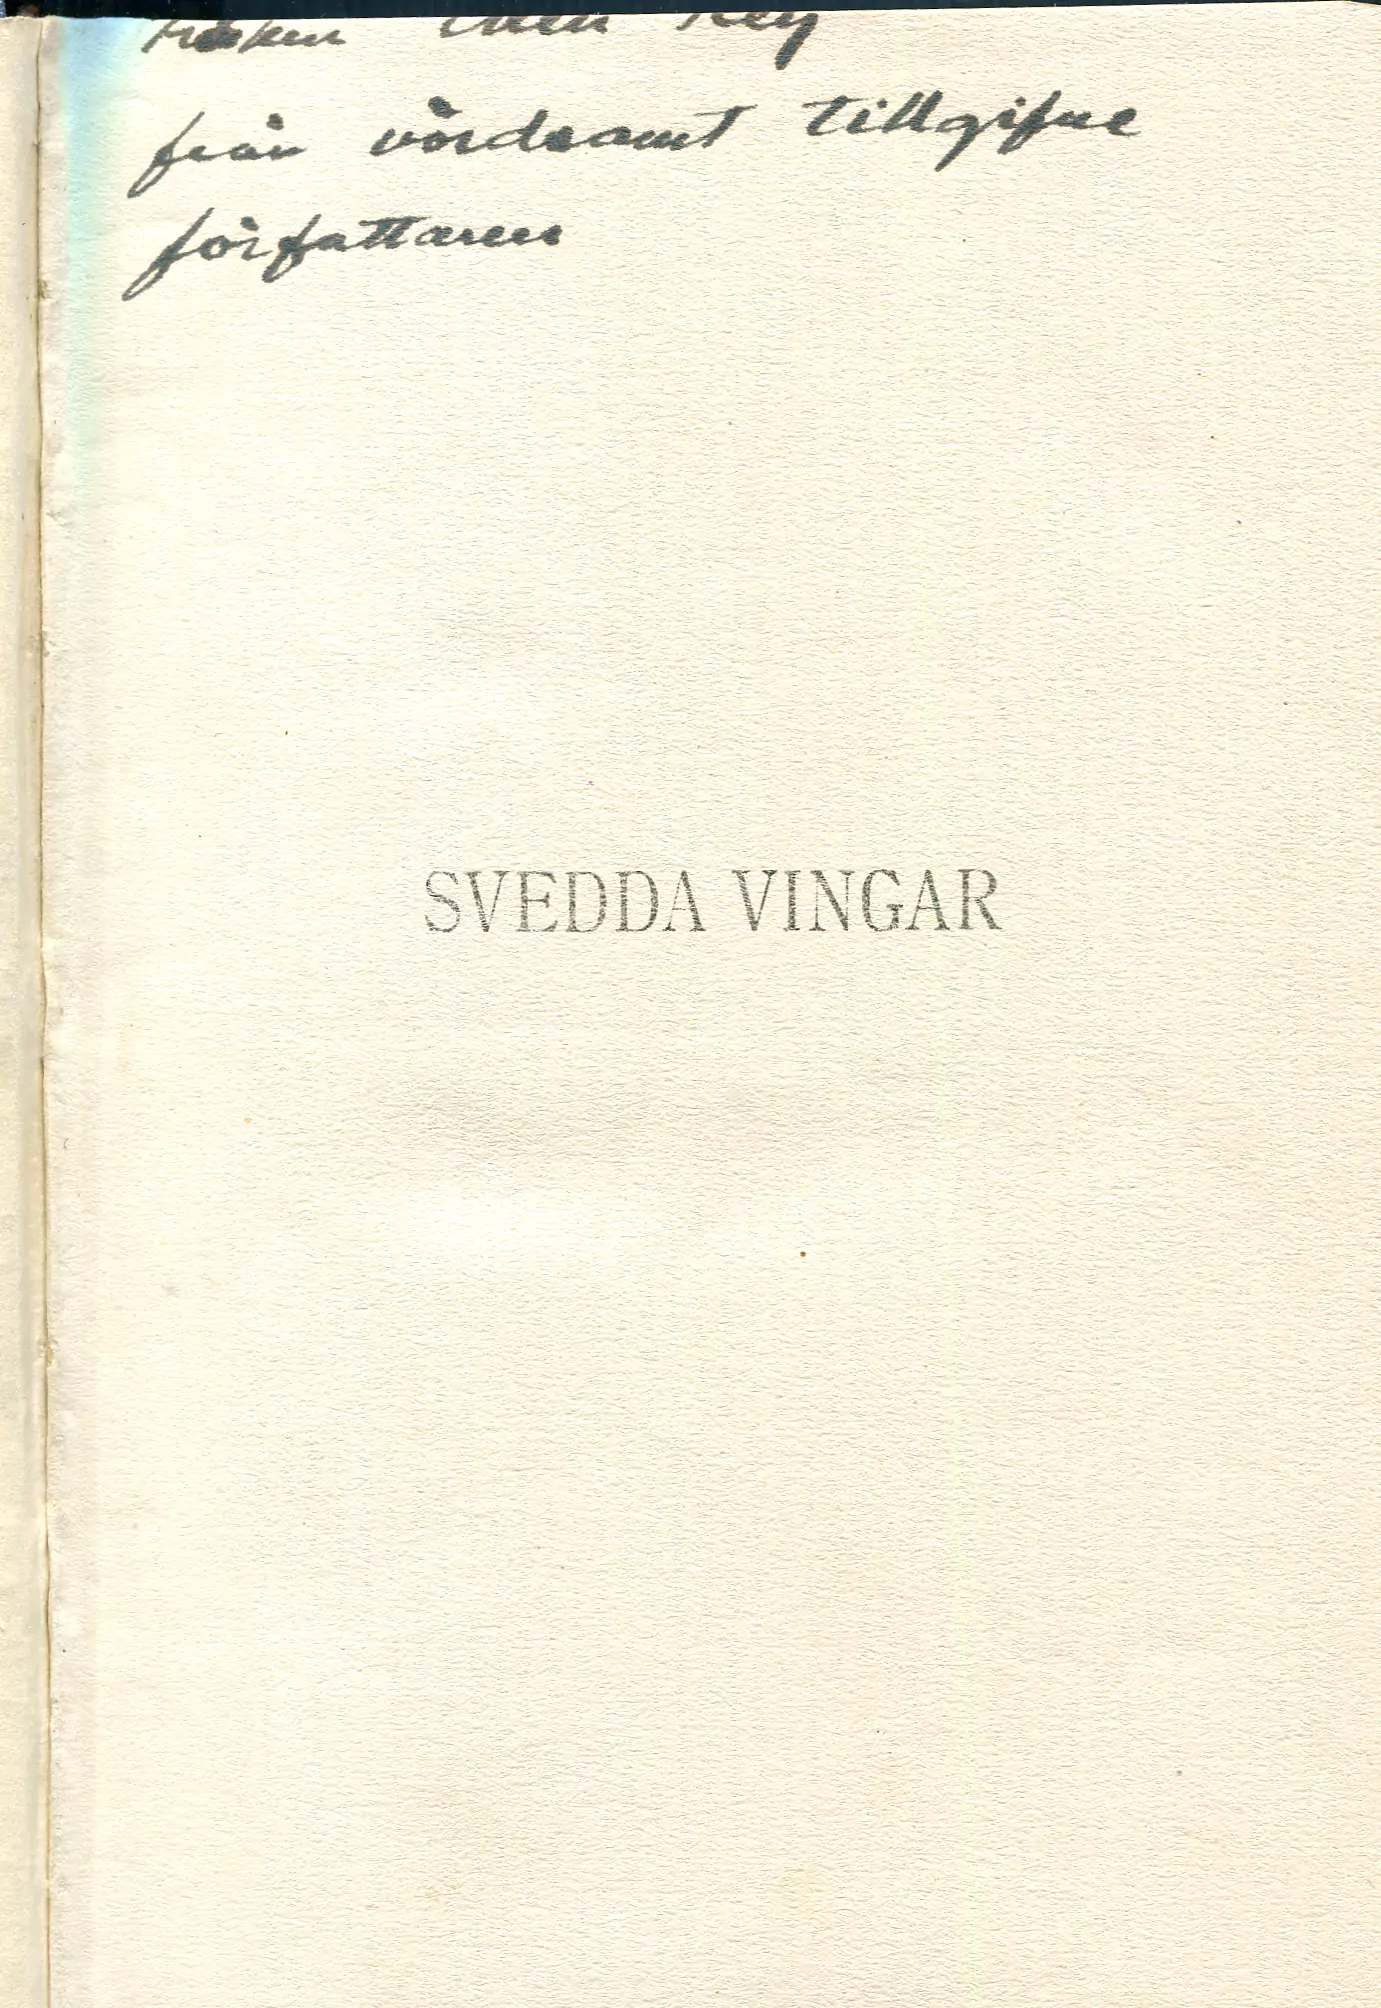 Svedda vingar , Stockholm 1919